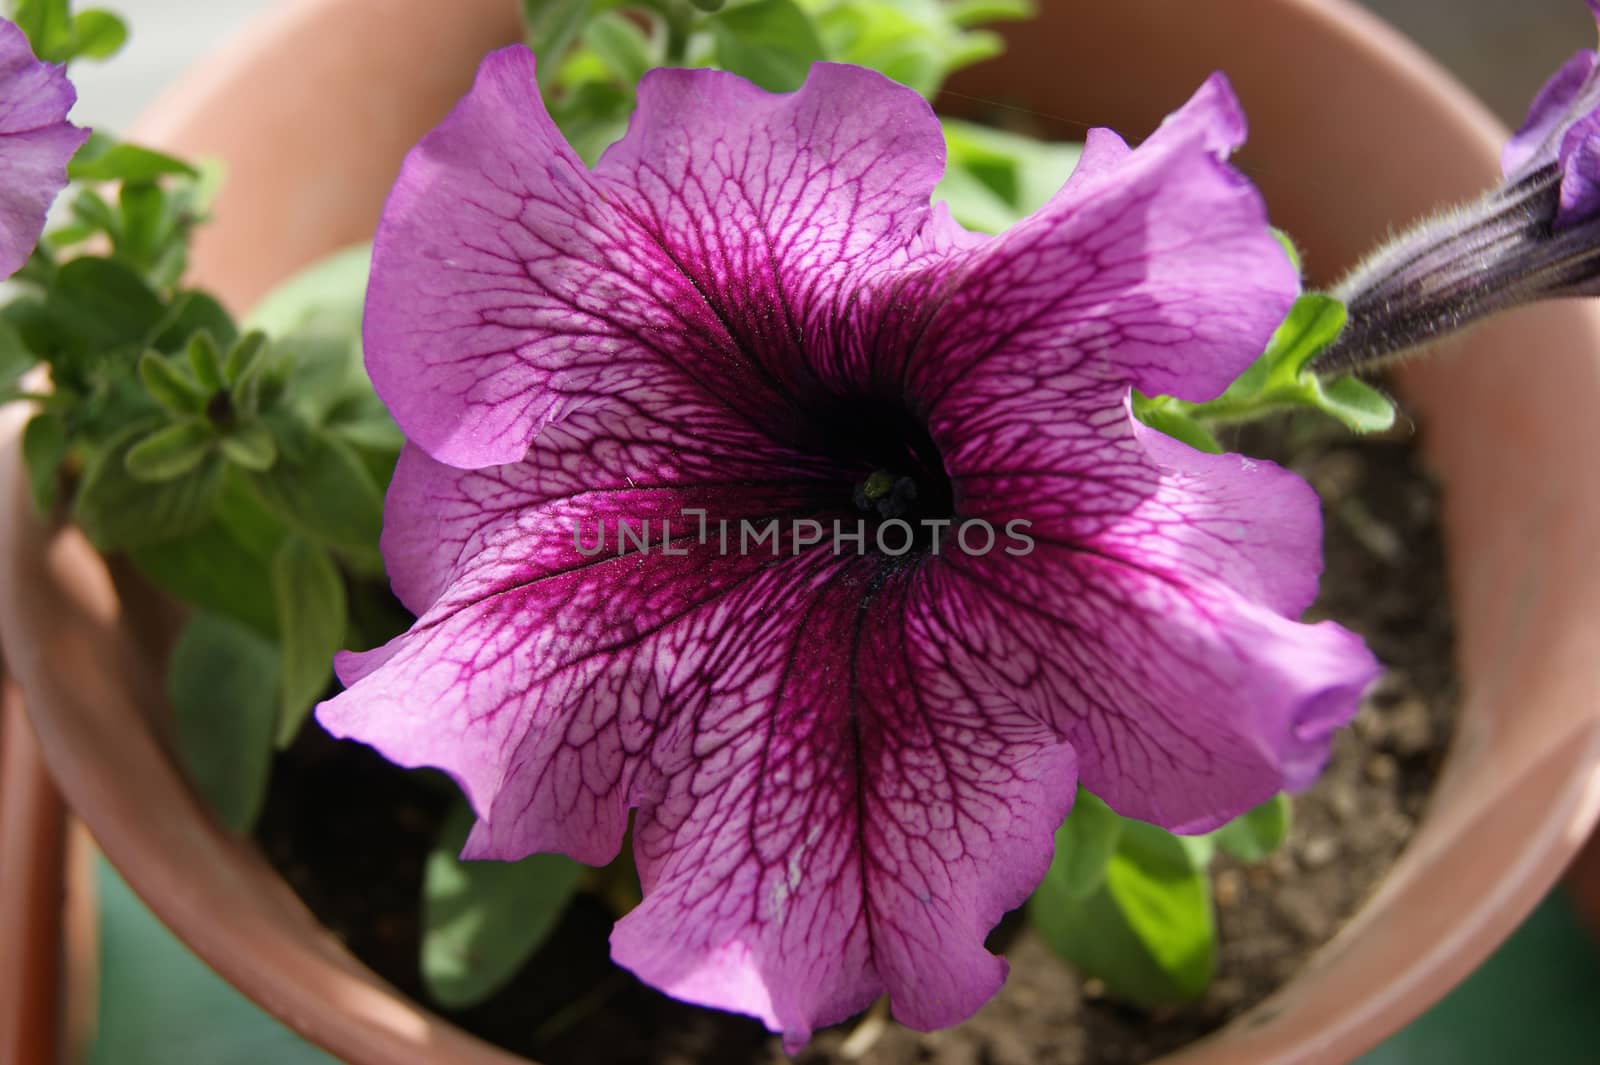 The Beautiful rose flower petunia in pot.Decorative plant